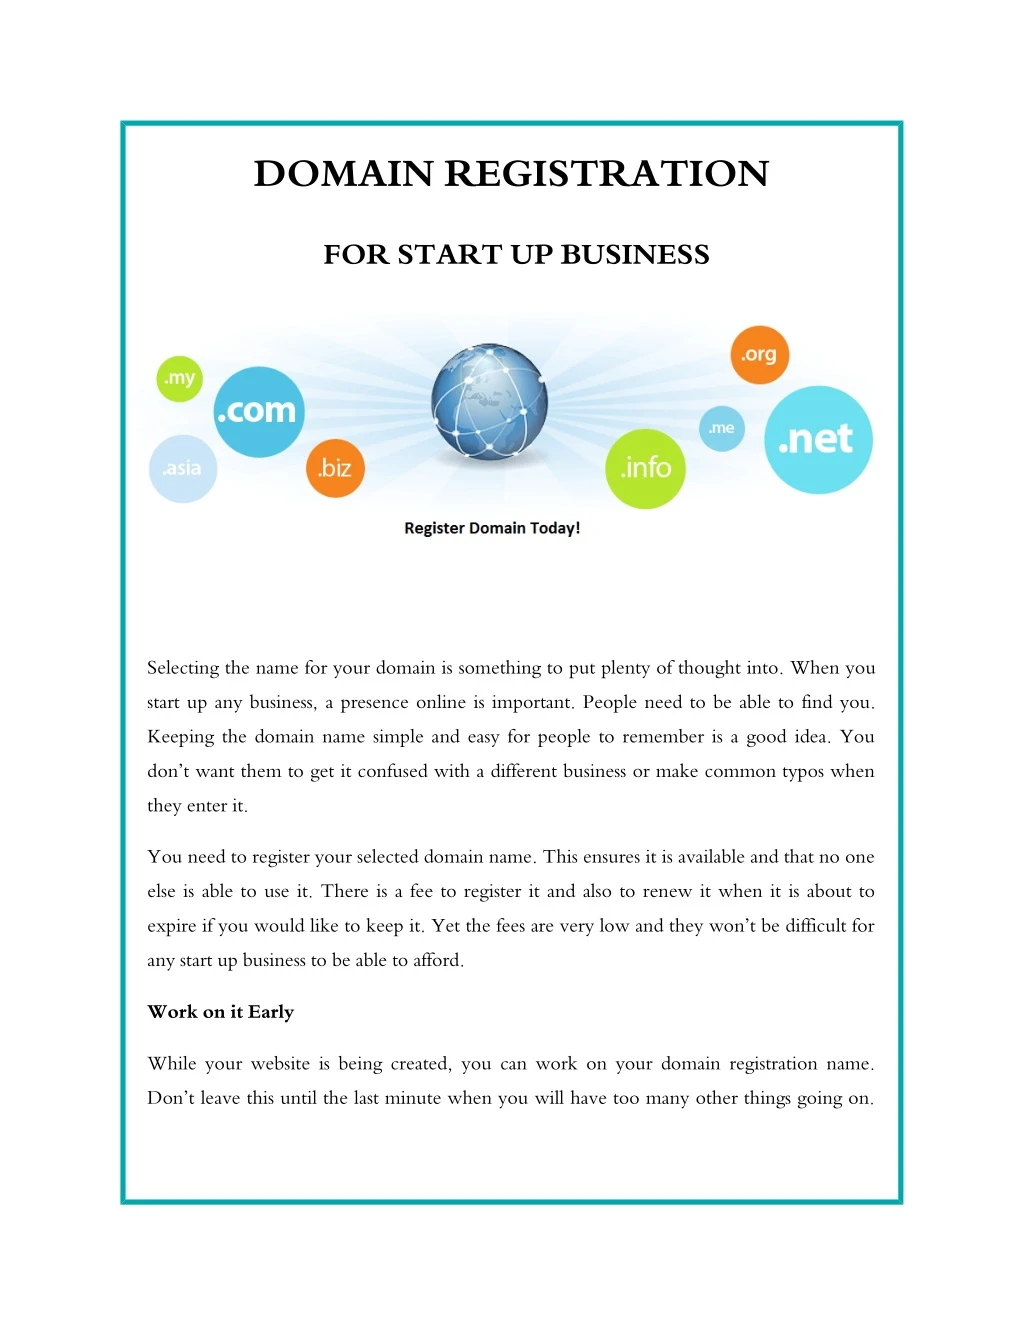 domain registration for start up business